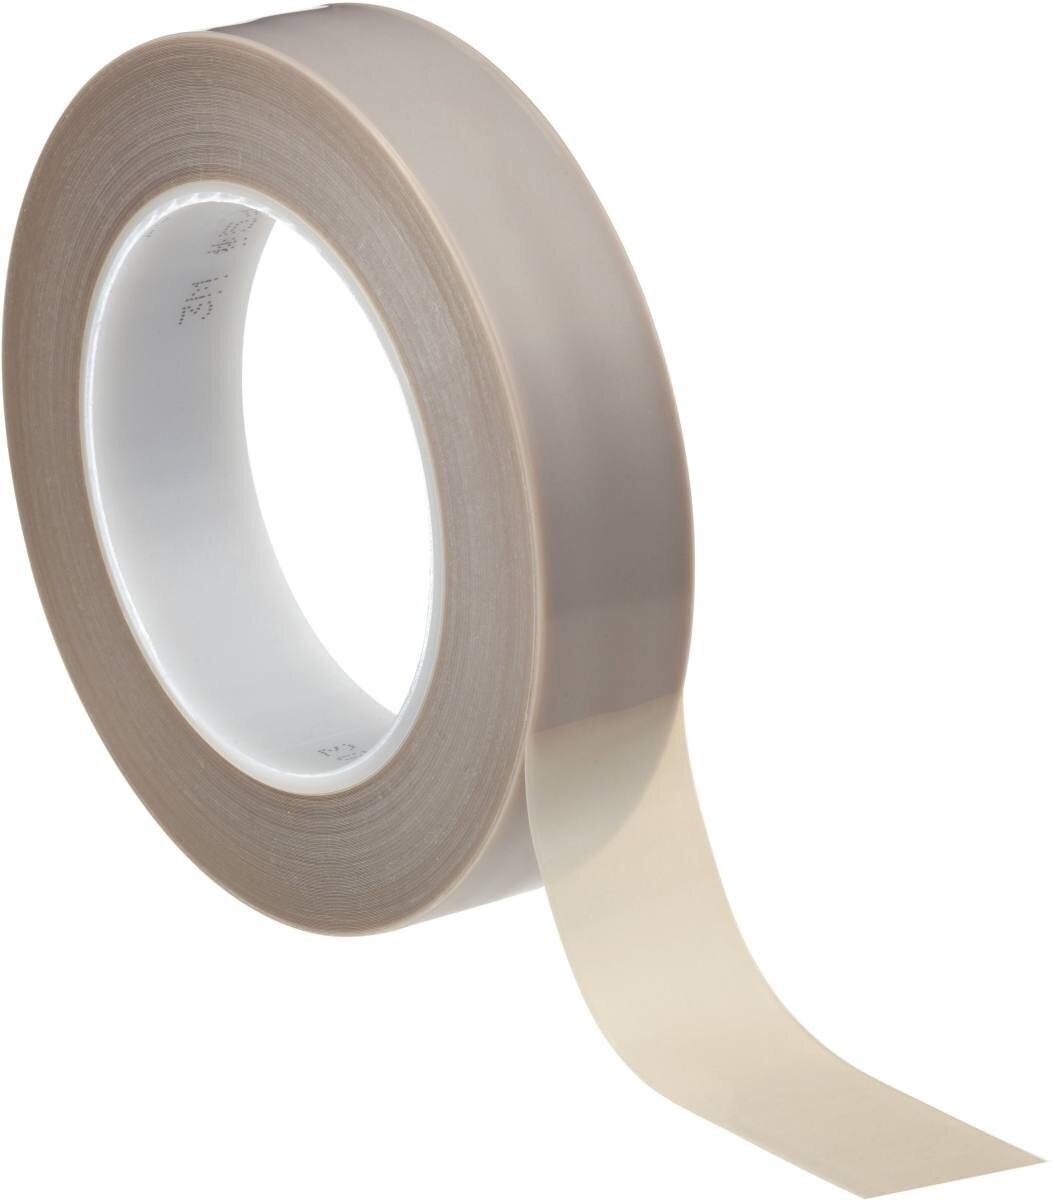 3M 5481 PTFE film adhesive tape 25mmx33m, 0.17mm, silicone